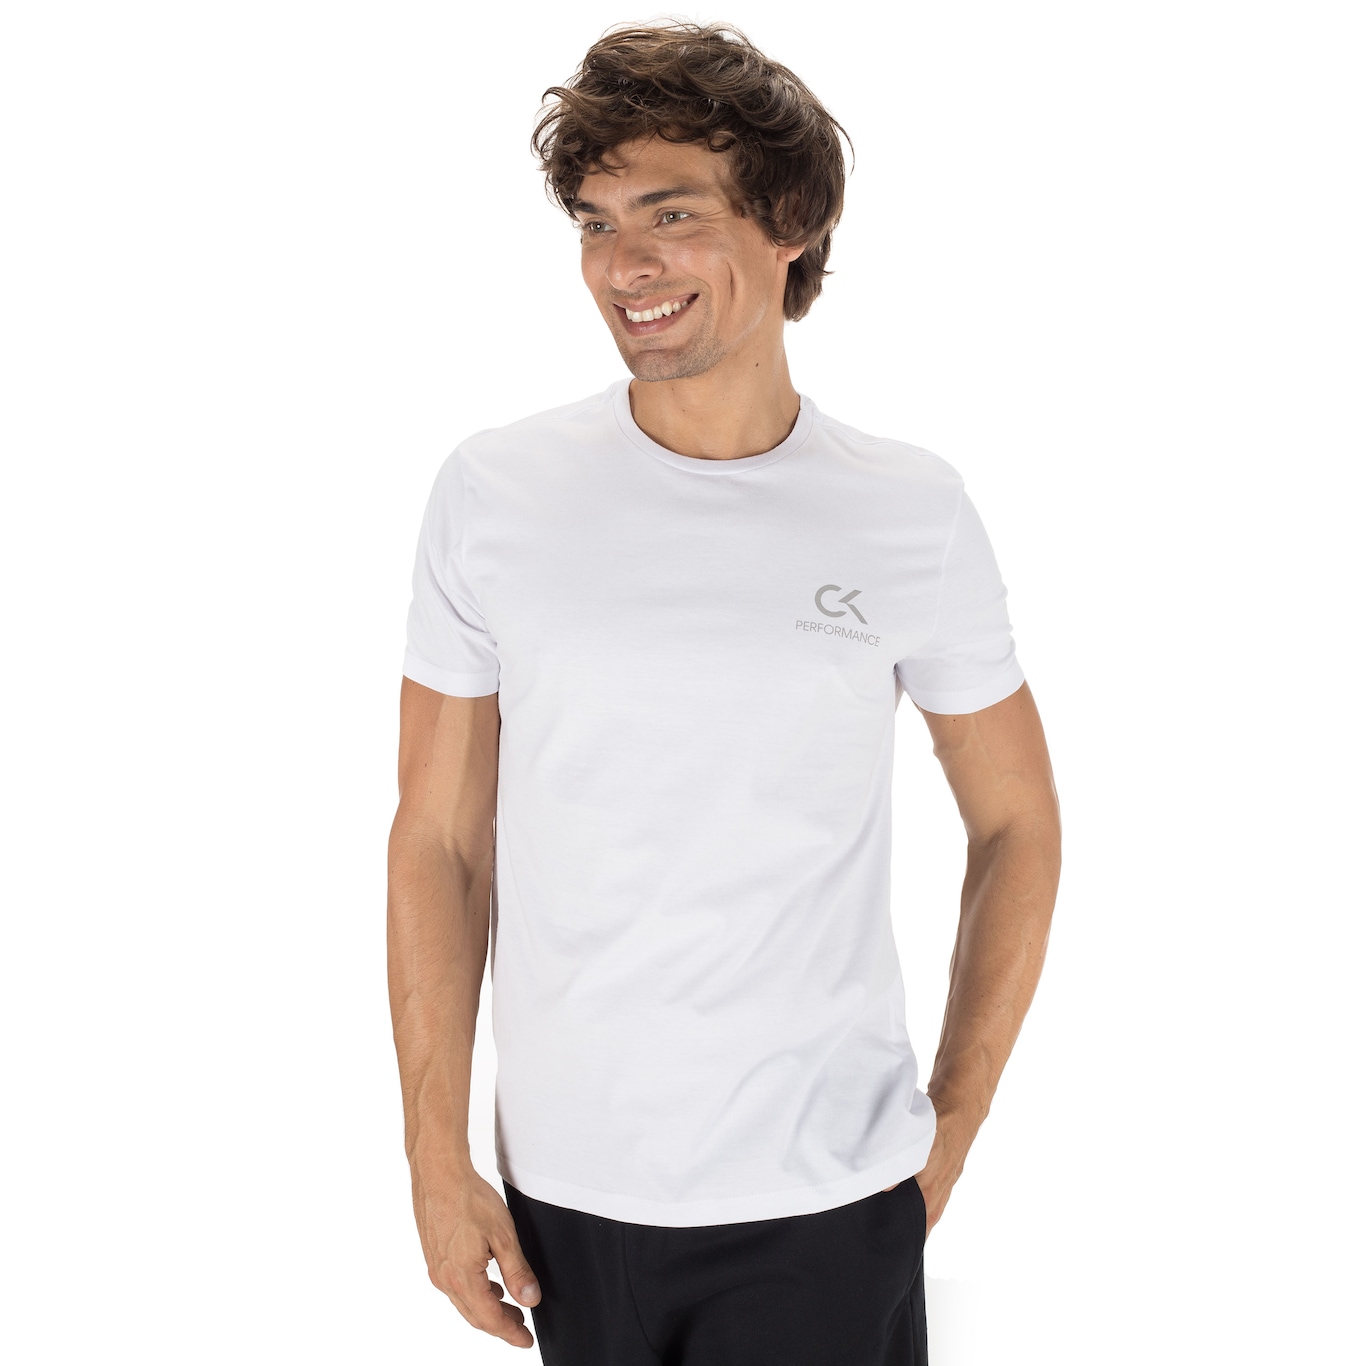 Camiseta Calvin Klein CK Básica - Masculina